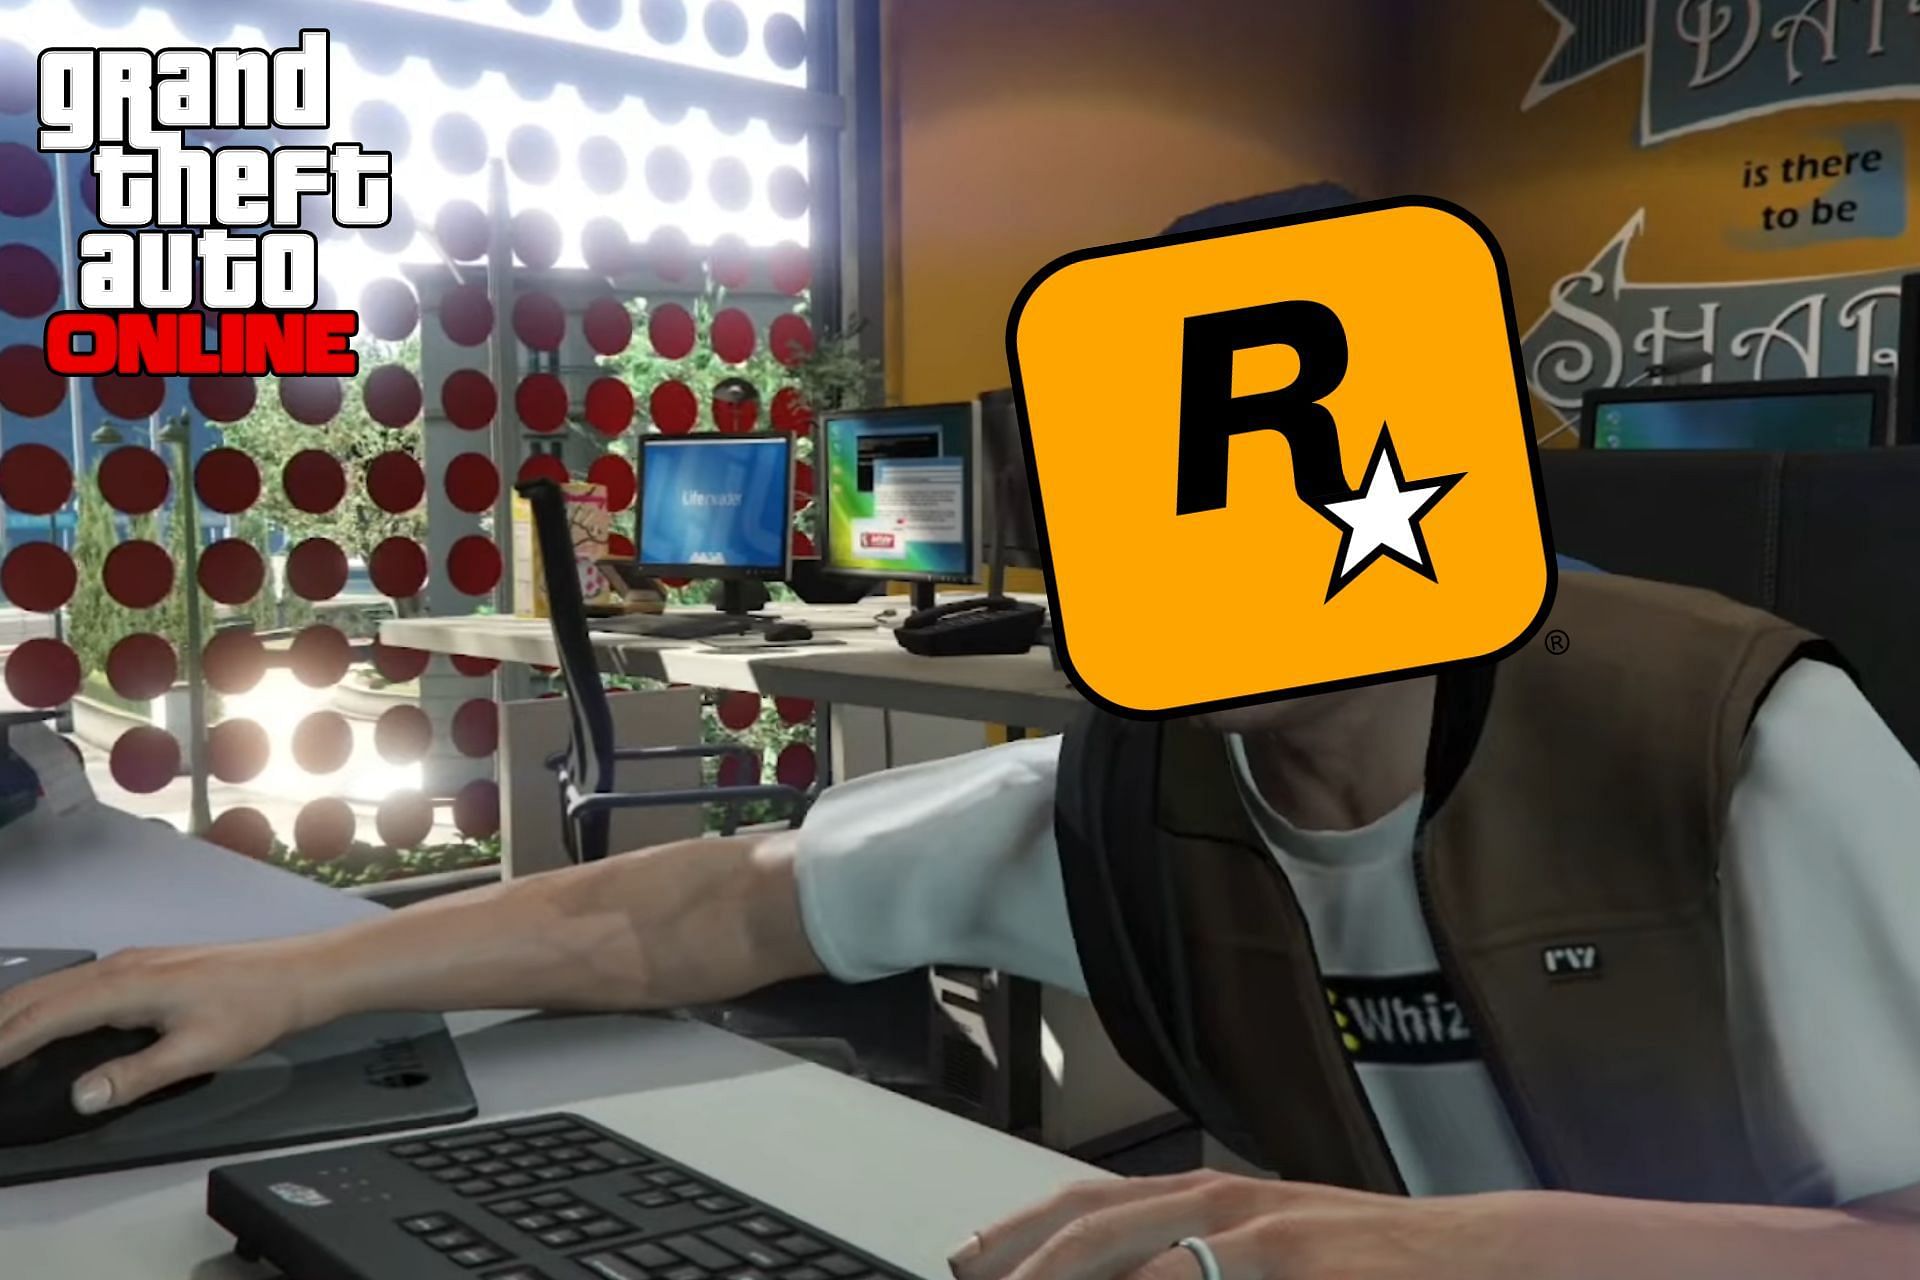 GTA fans demand Rockstar Games to immediately resolve all game-breaking issues (Image via Sportskeeda)